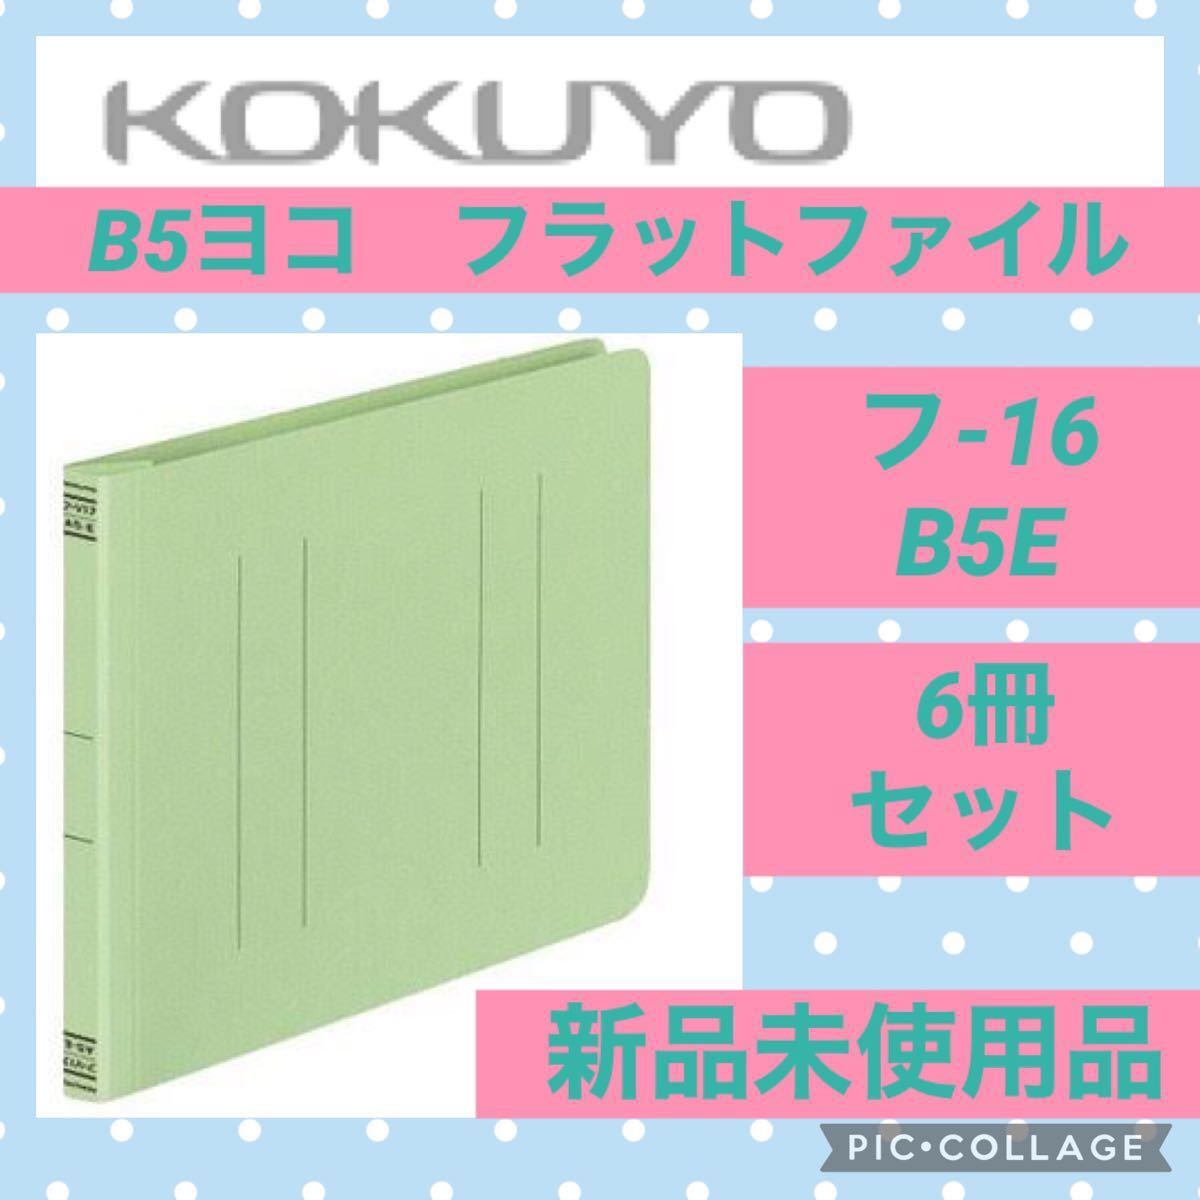 PayPayフリマ｜コクヨ フラット ファイル B5-E フ-16 緑 グリーン セット 新品 未使用 KOKUYO 書類 オフィス B5 文房具